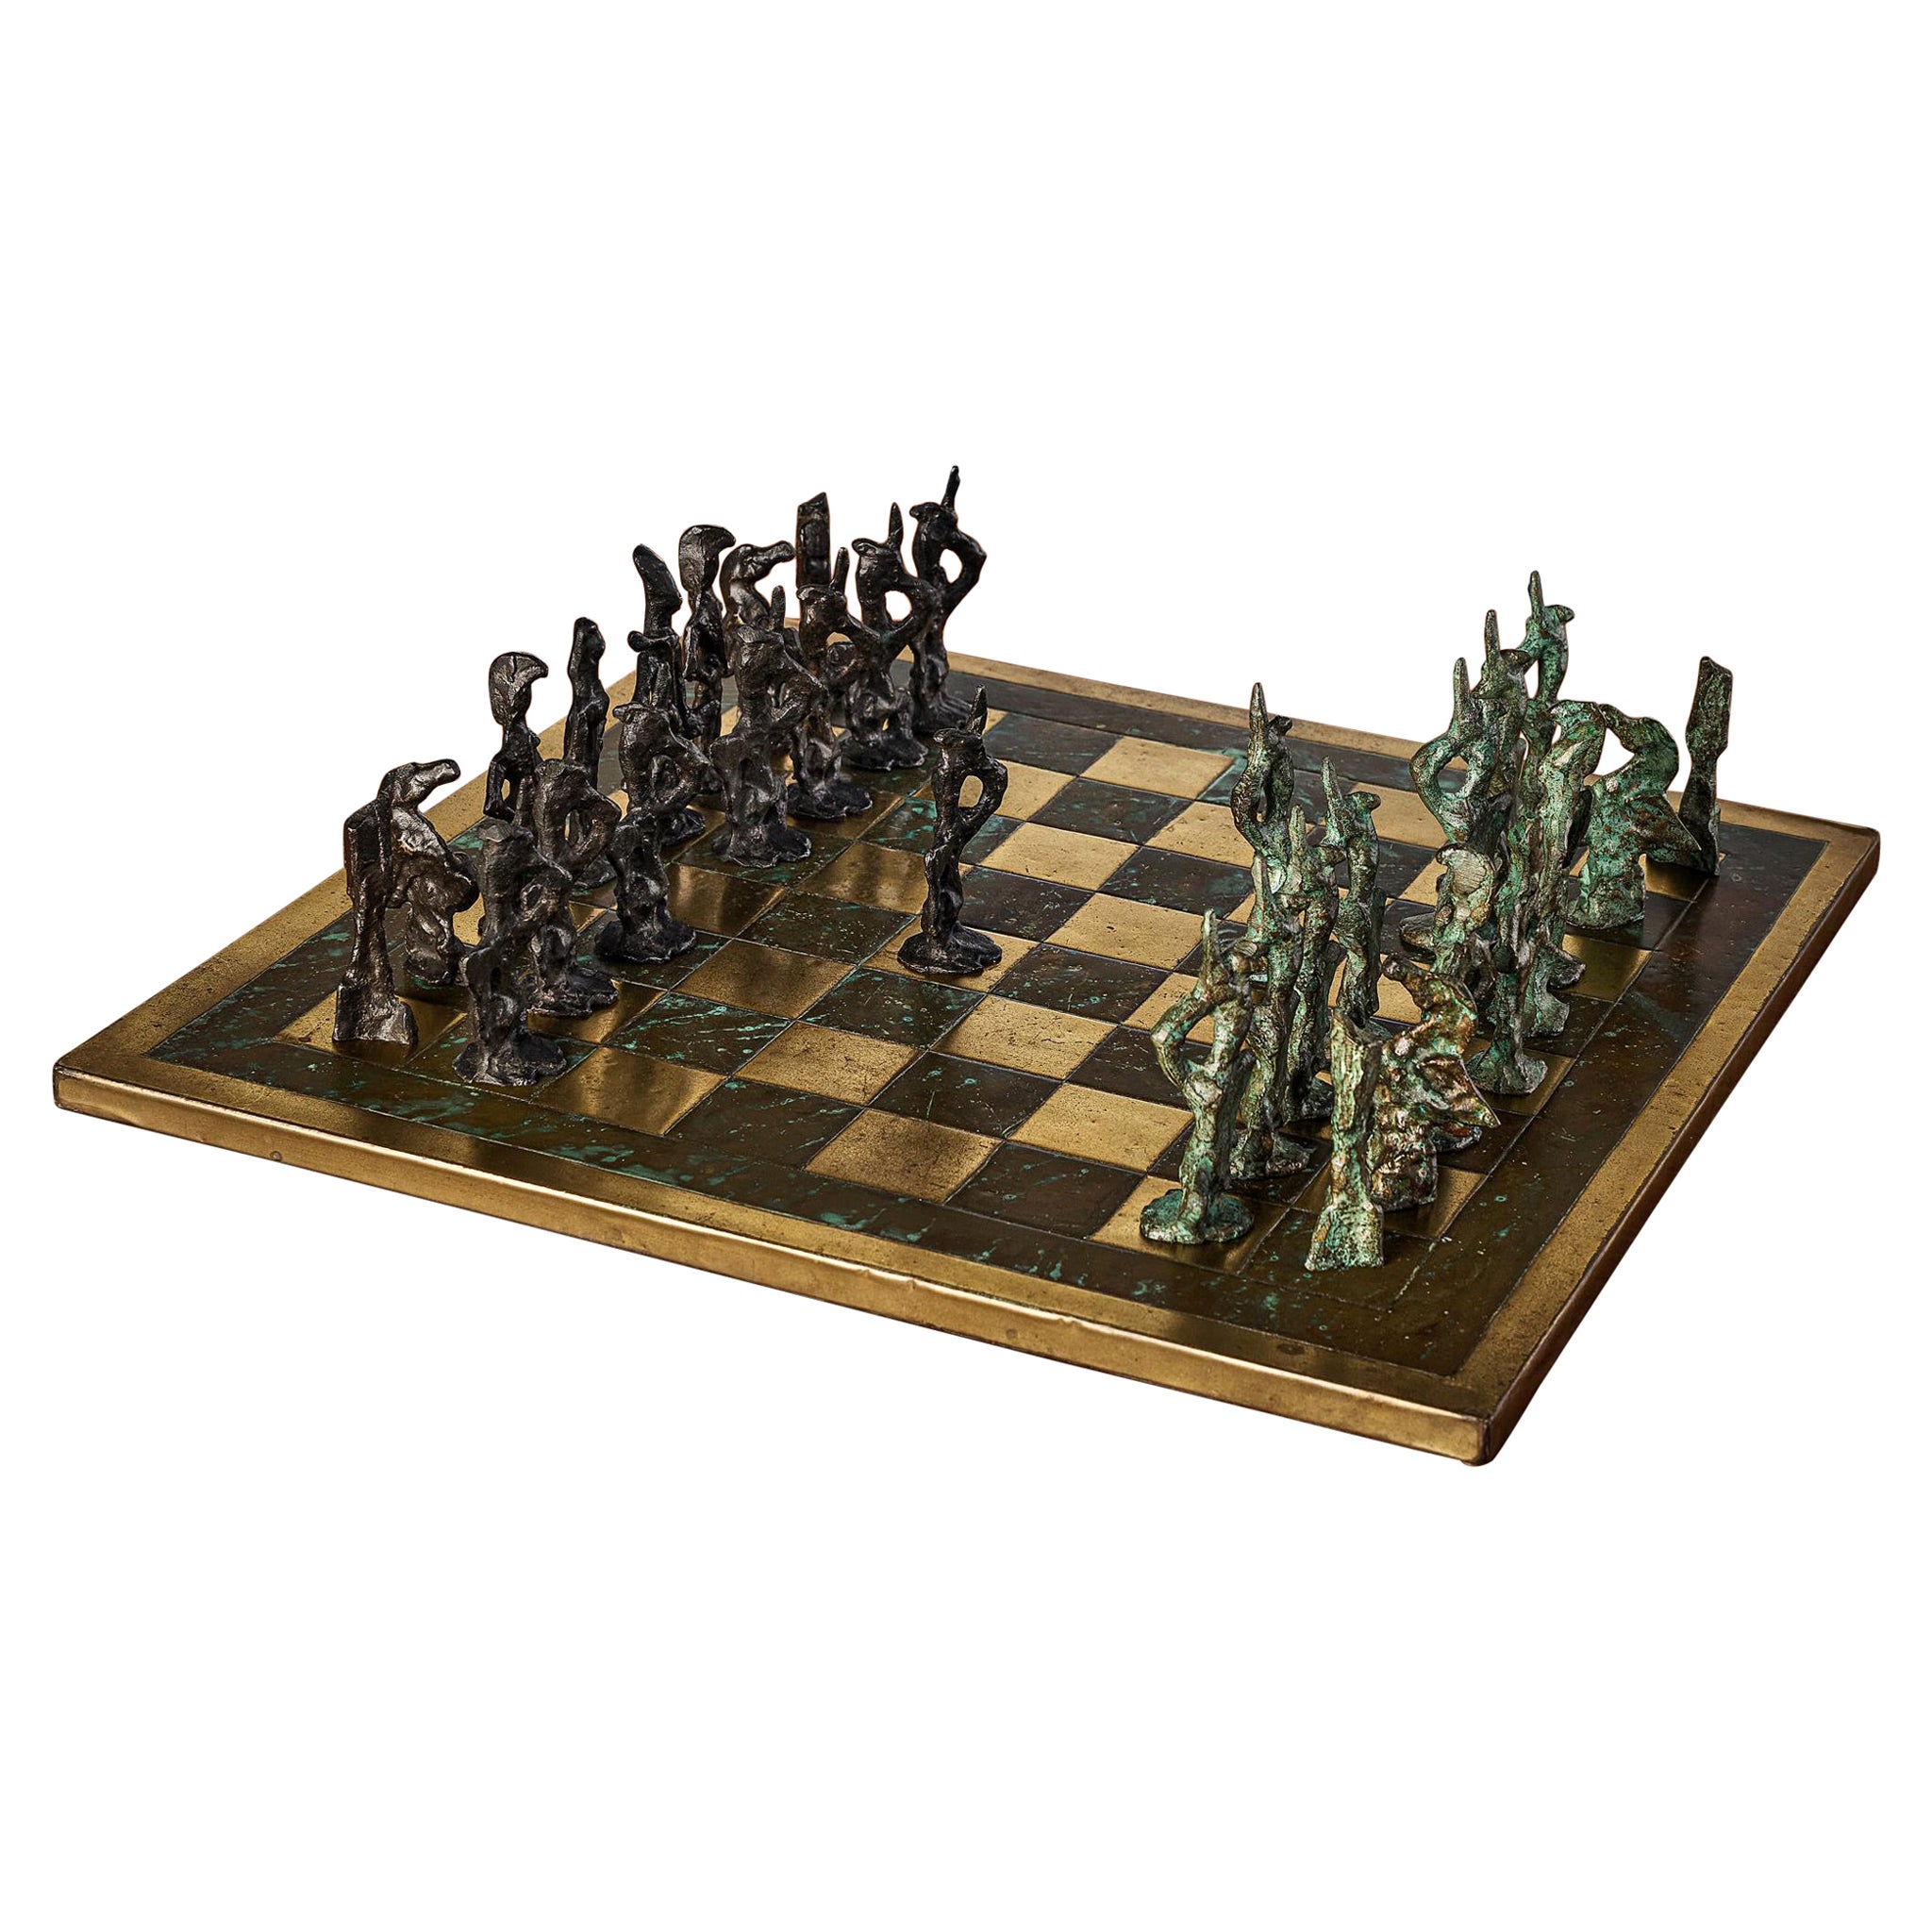 Sculptural Italian Chess Set in the Style of Alberto Giacometti